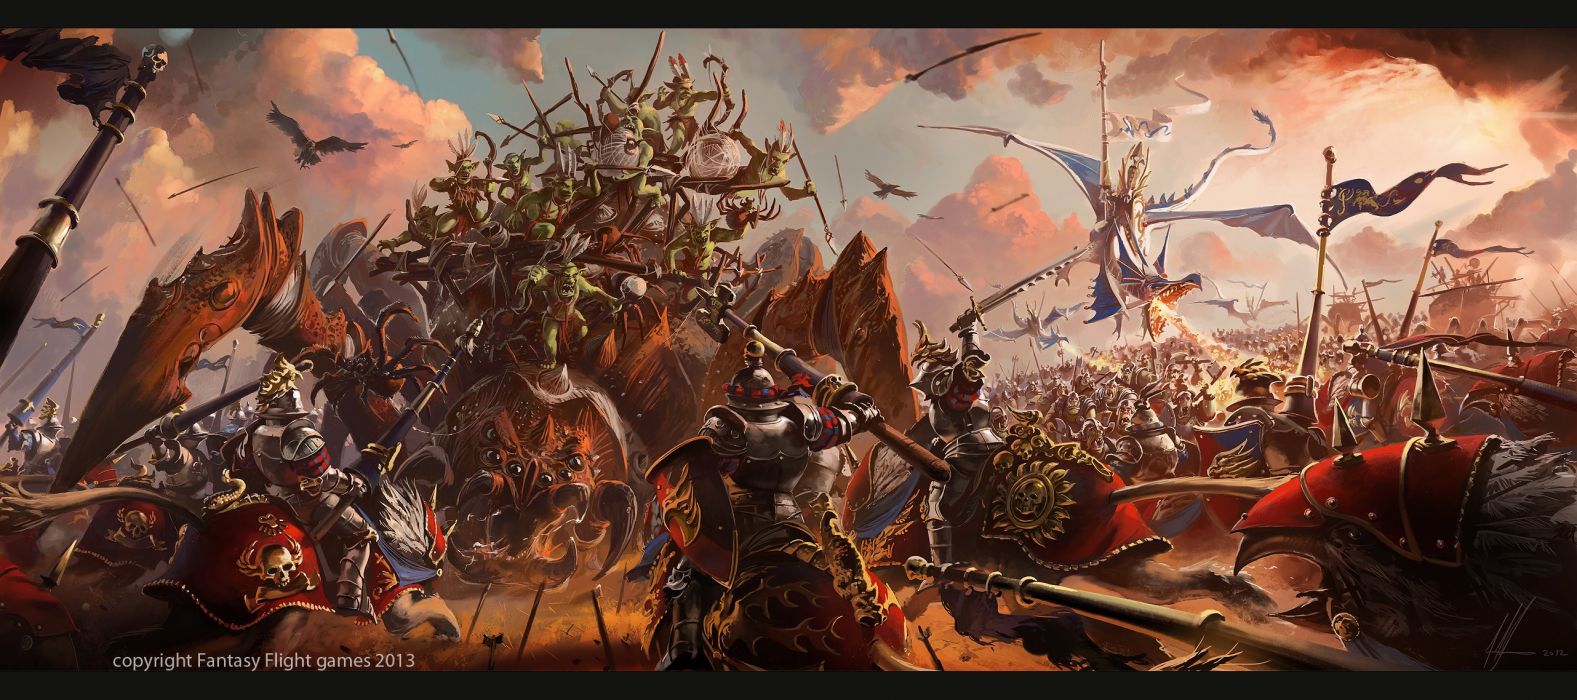 HD desktop wallpaper Fantasy Video Game Total War Total War Warhammer  Beastmen Total War Warhammer download free picture 420403